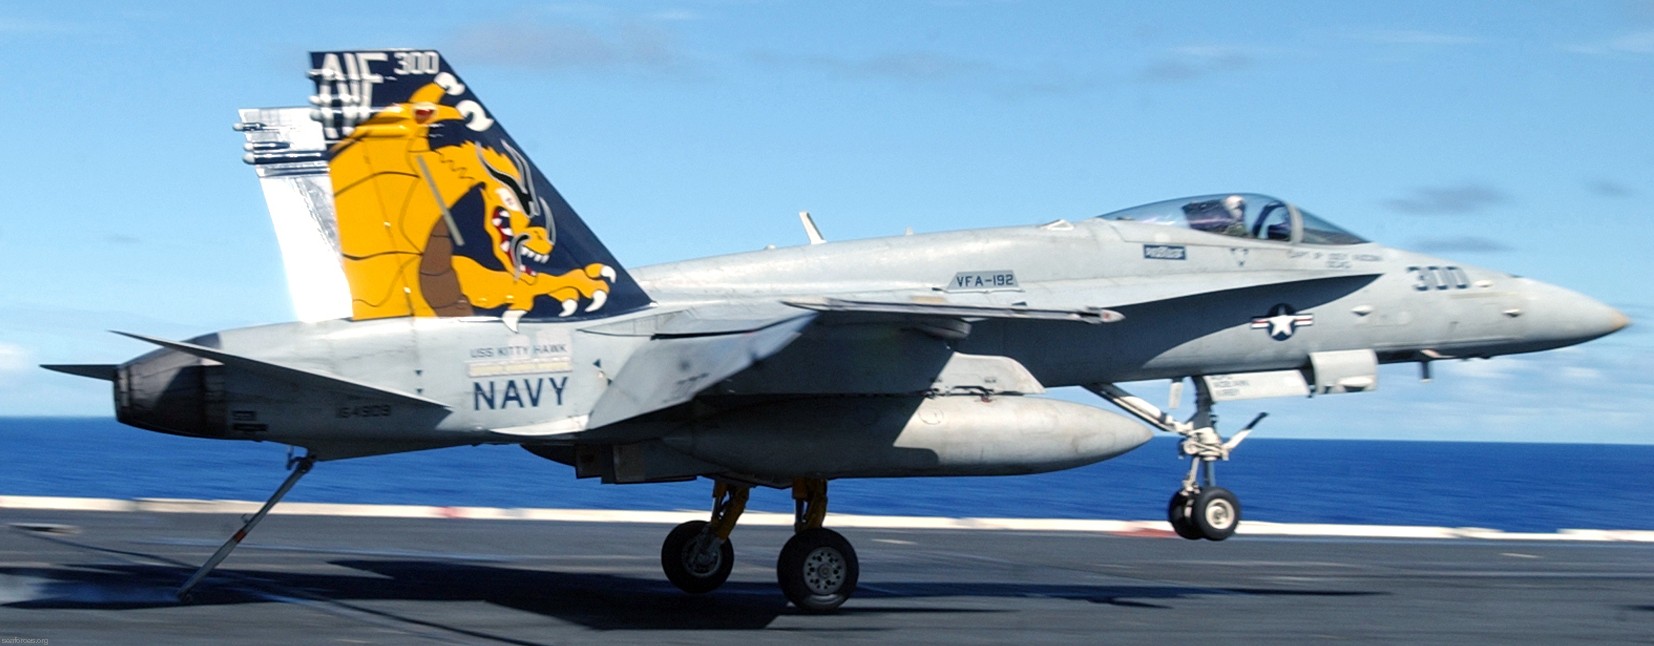 vfa-192 golden dragons strike fighter squadron navy f/a-18c hornet carrier air wing cvw-5 uss kitty hawk cv-63 87